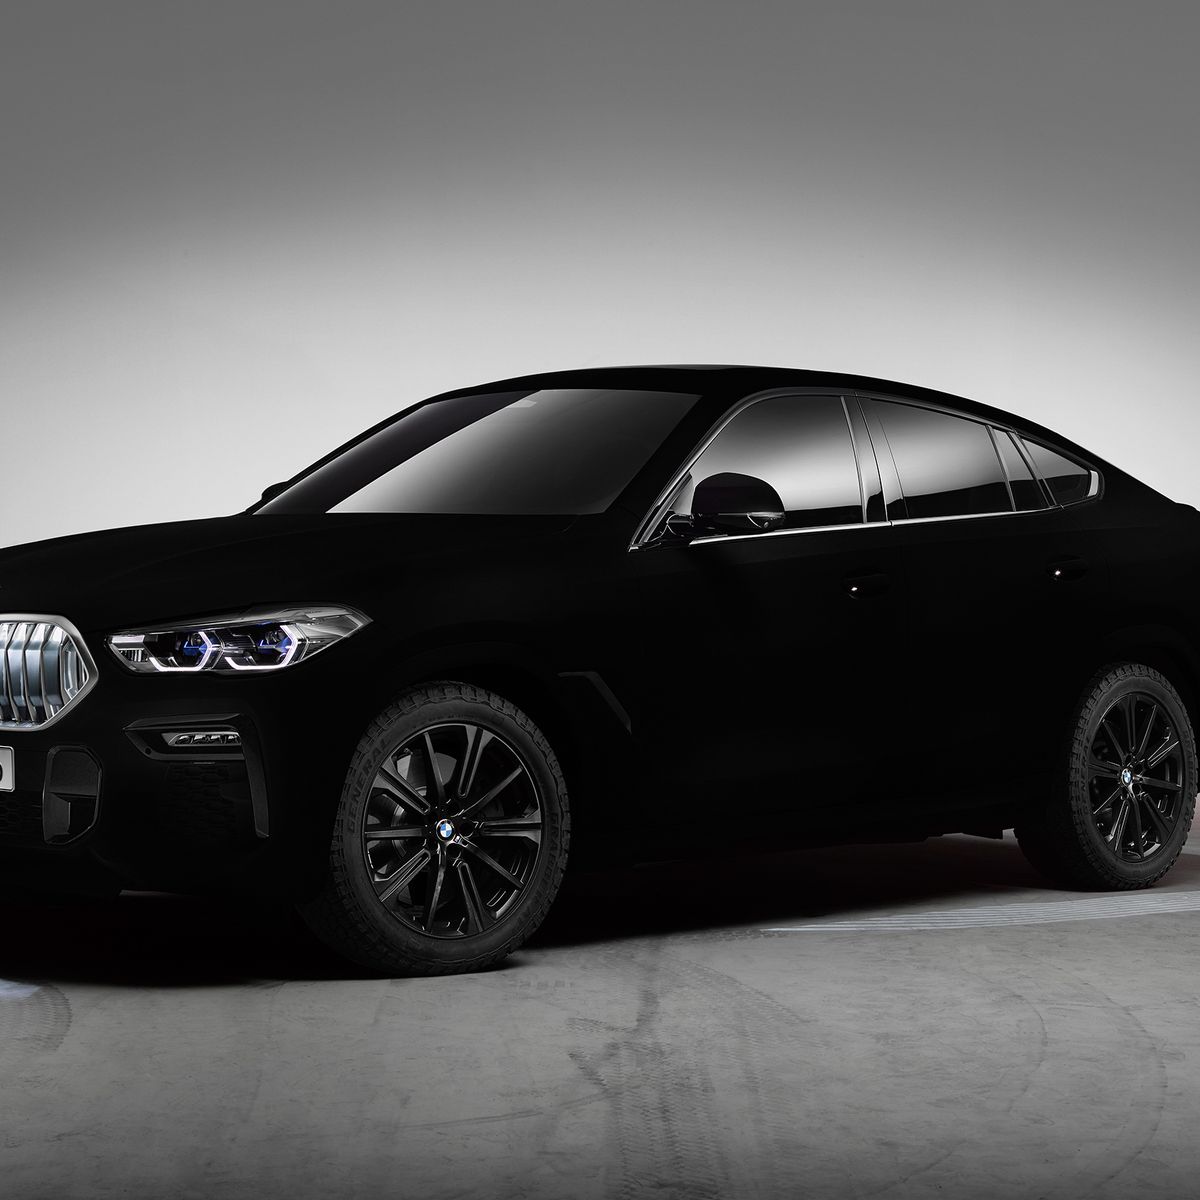 Vantablack BMW X6: A Car So Black, It's Like Staring Into A Black Hole